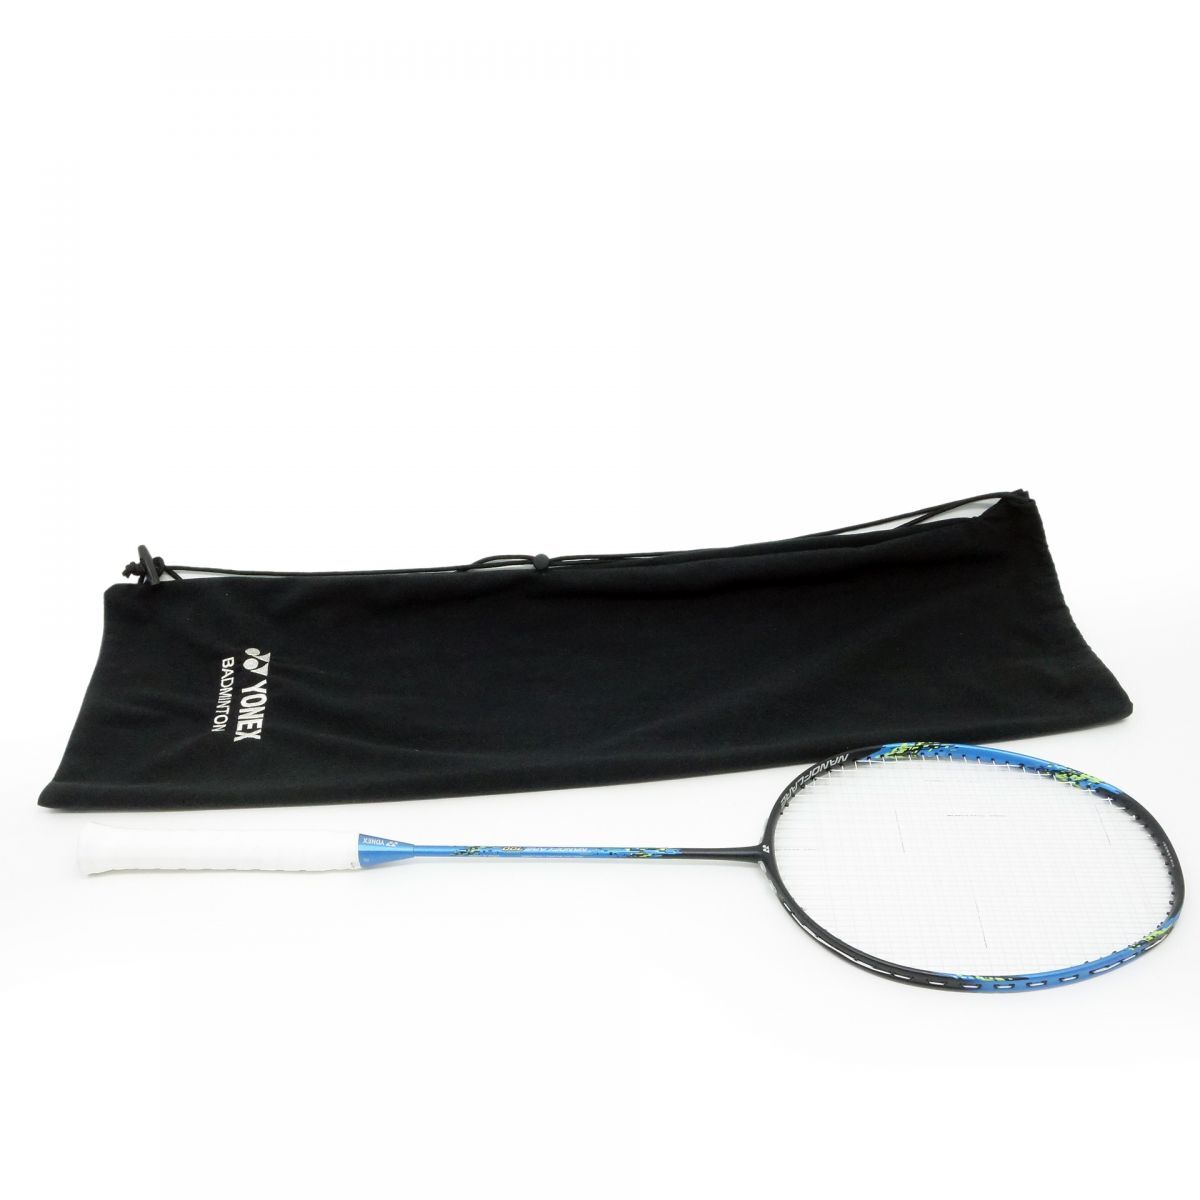 116 YONEX/ Yonex nano flair 700 NF-700 Cyan badminton racket size :4UG6 * used beautiful goods 